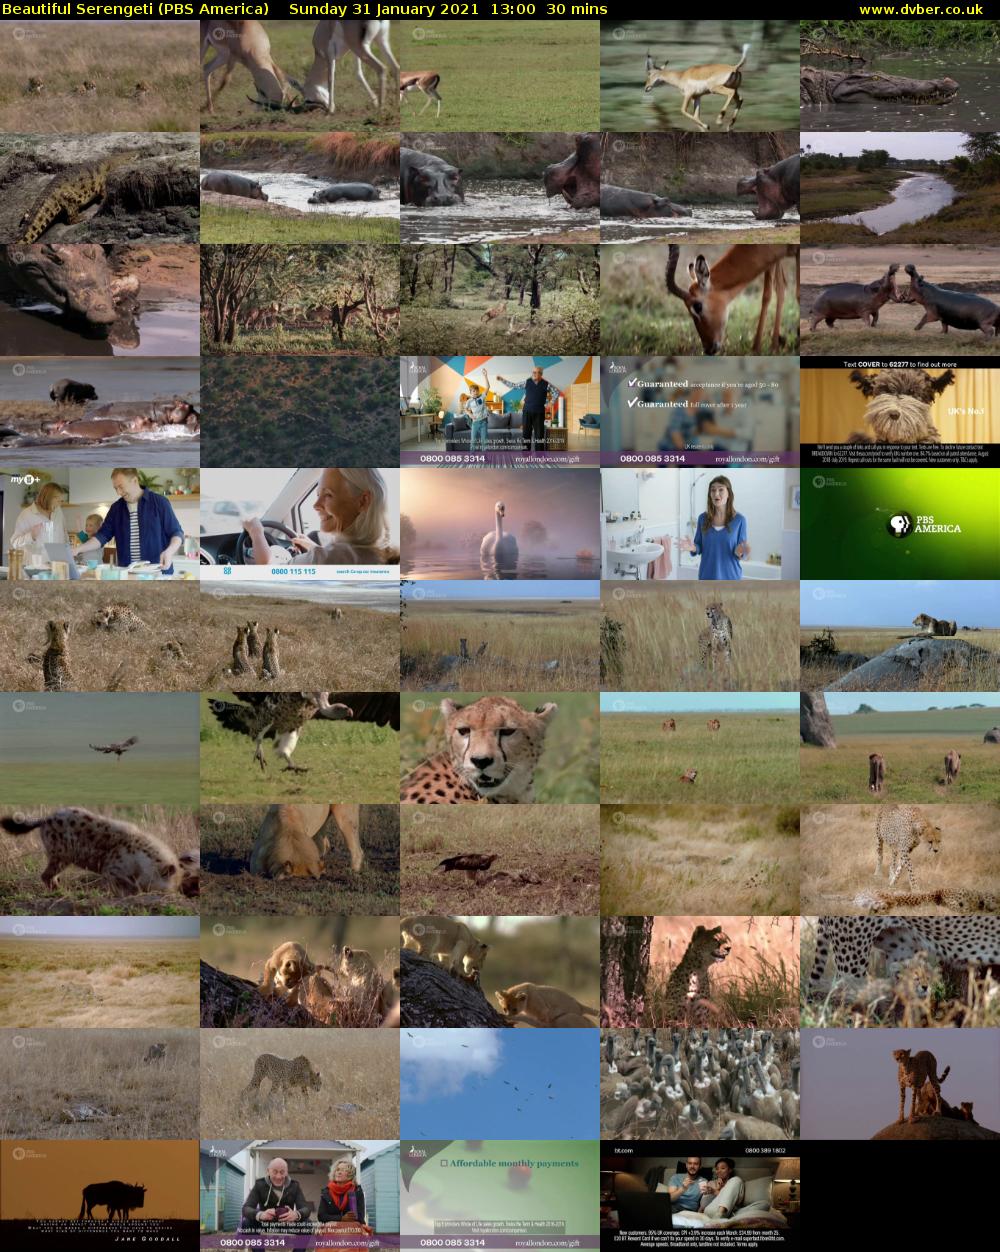 Beautiful Serengeti (PBS America) Sunday 31 January 2021 13:00 - 13:30